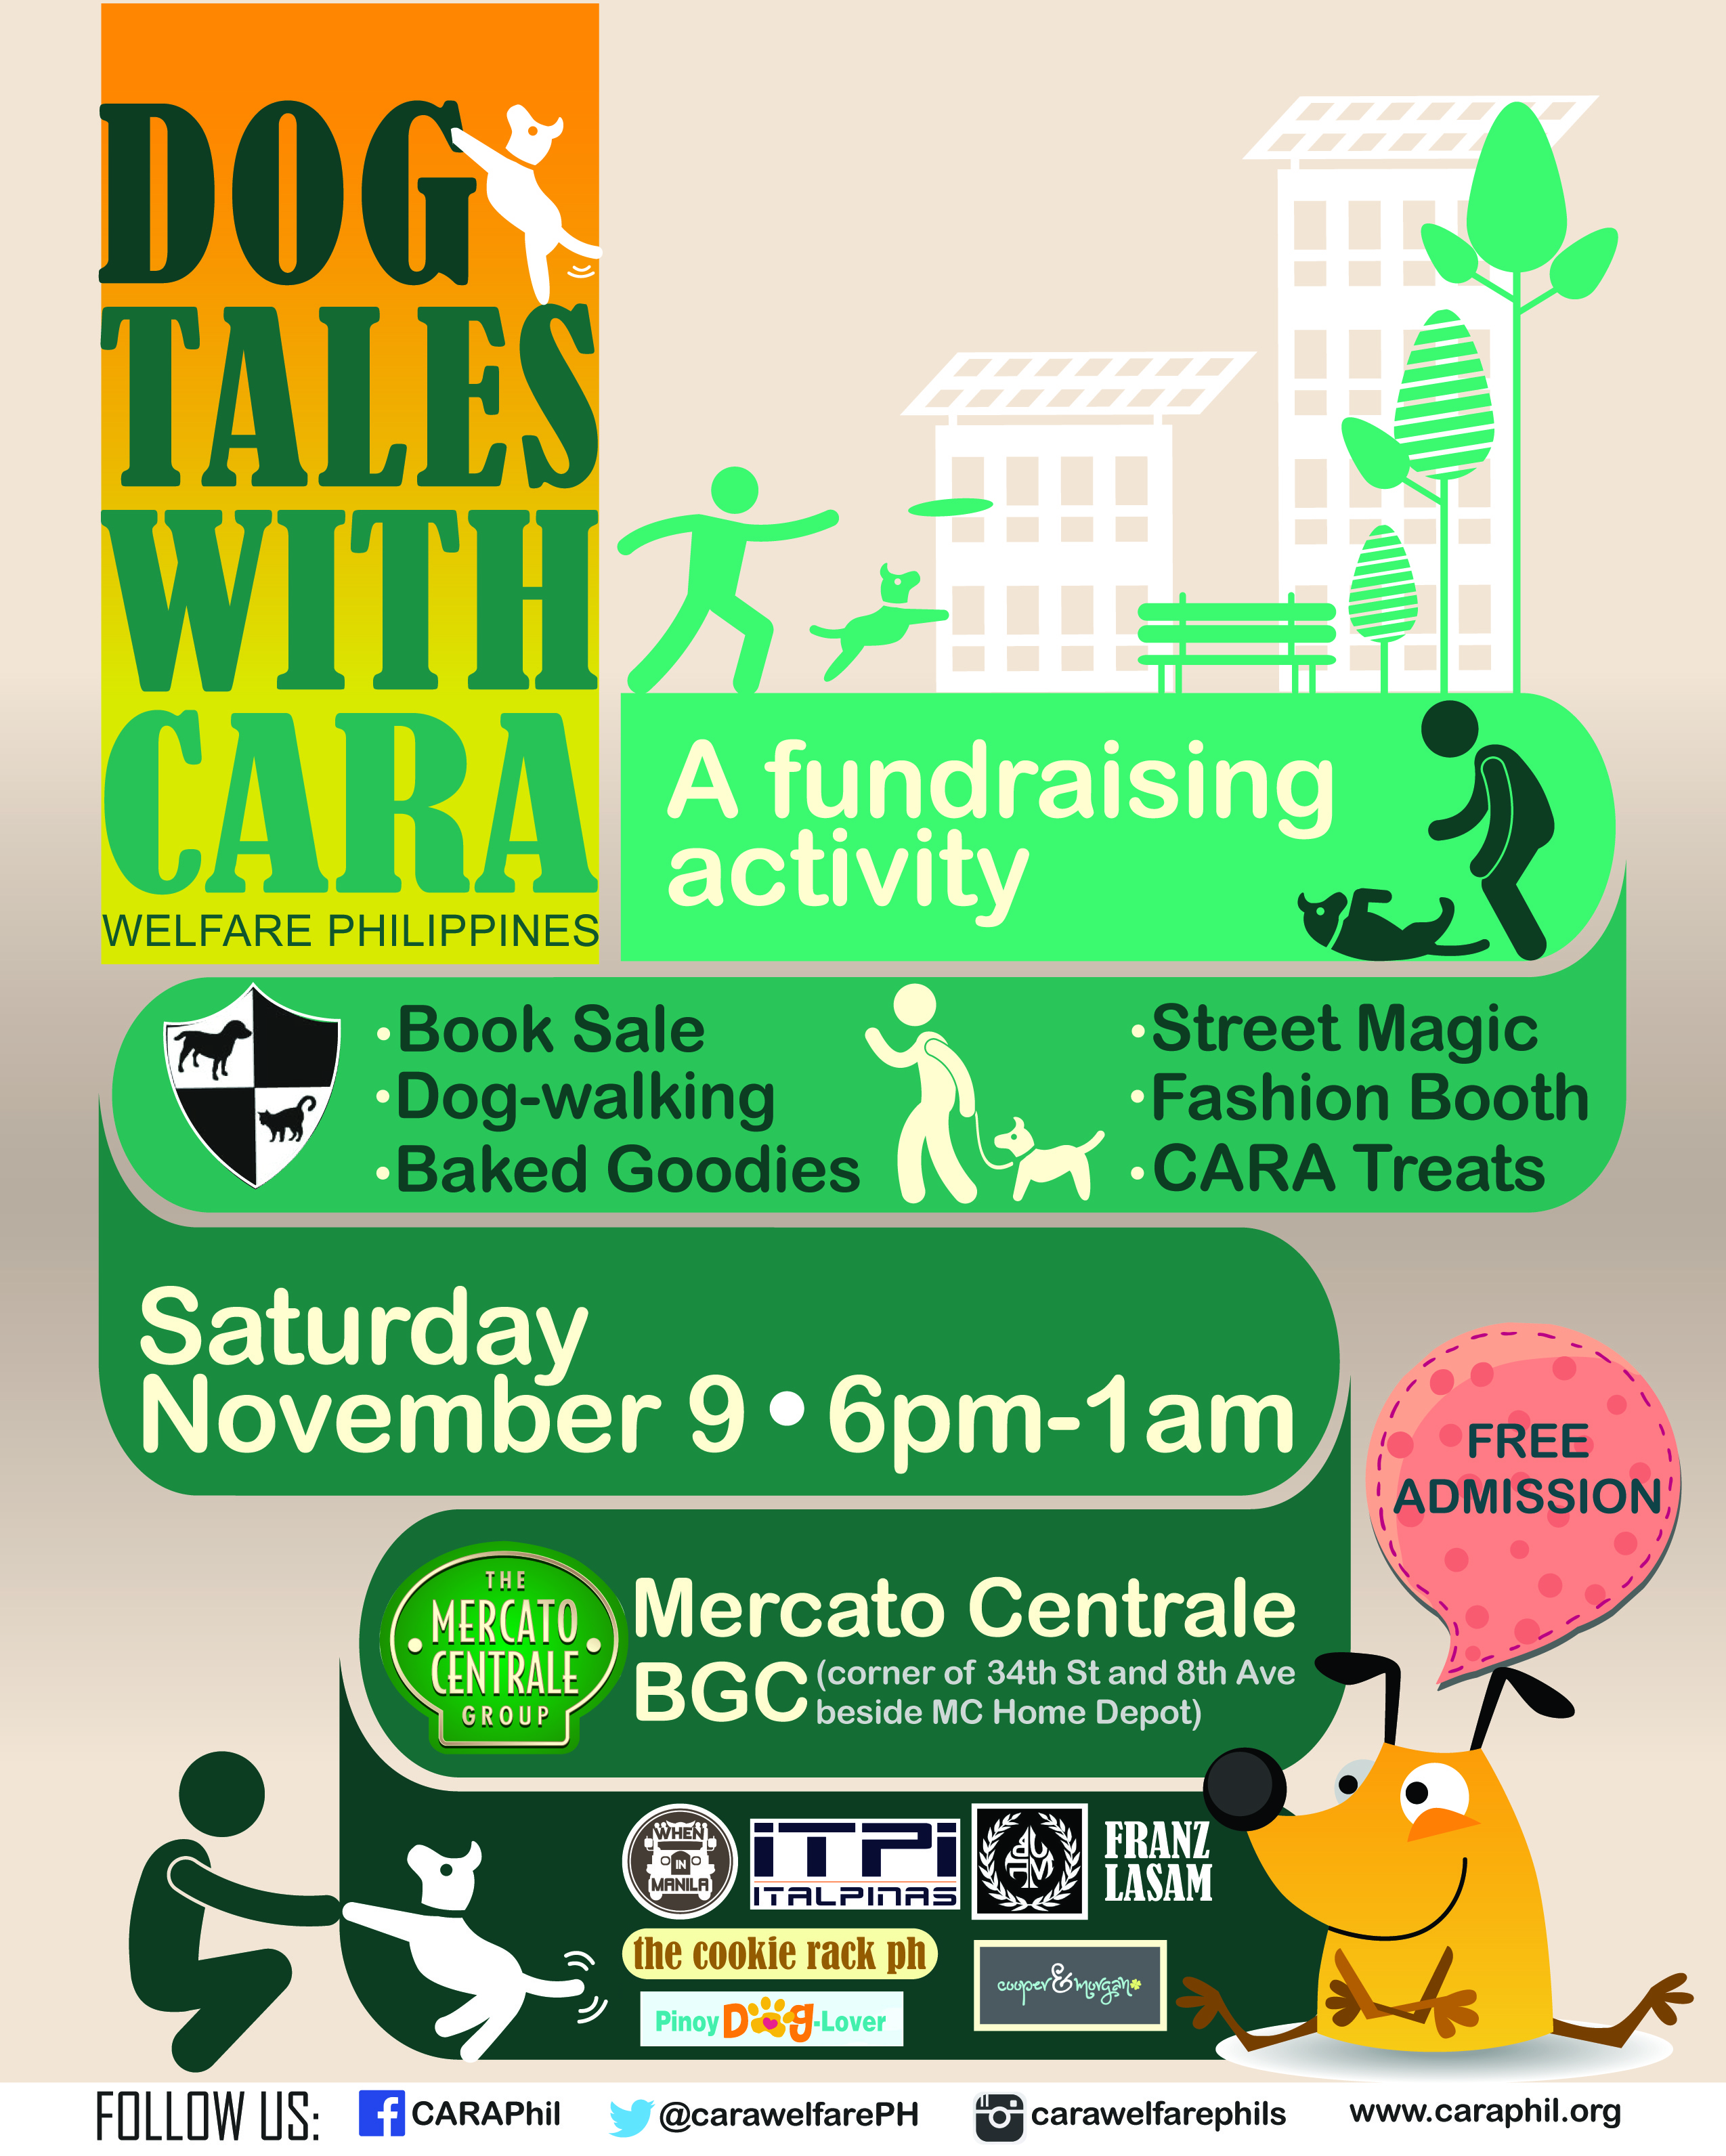 CARA Welfare Philippines - Fund-raising activity for animal welfare